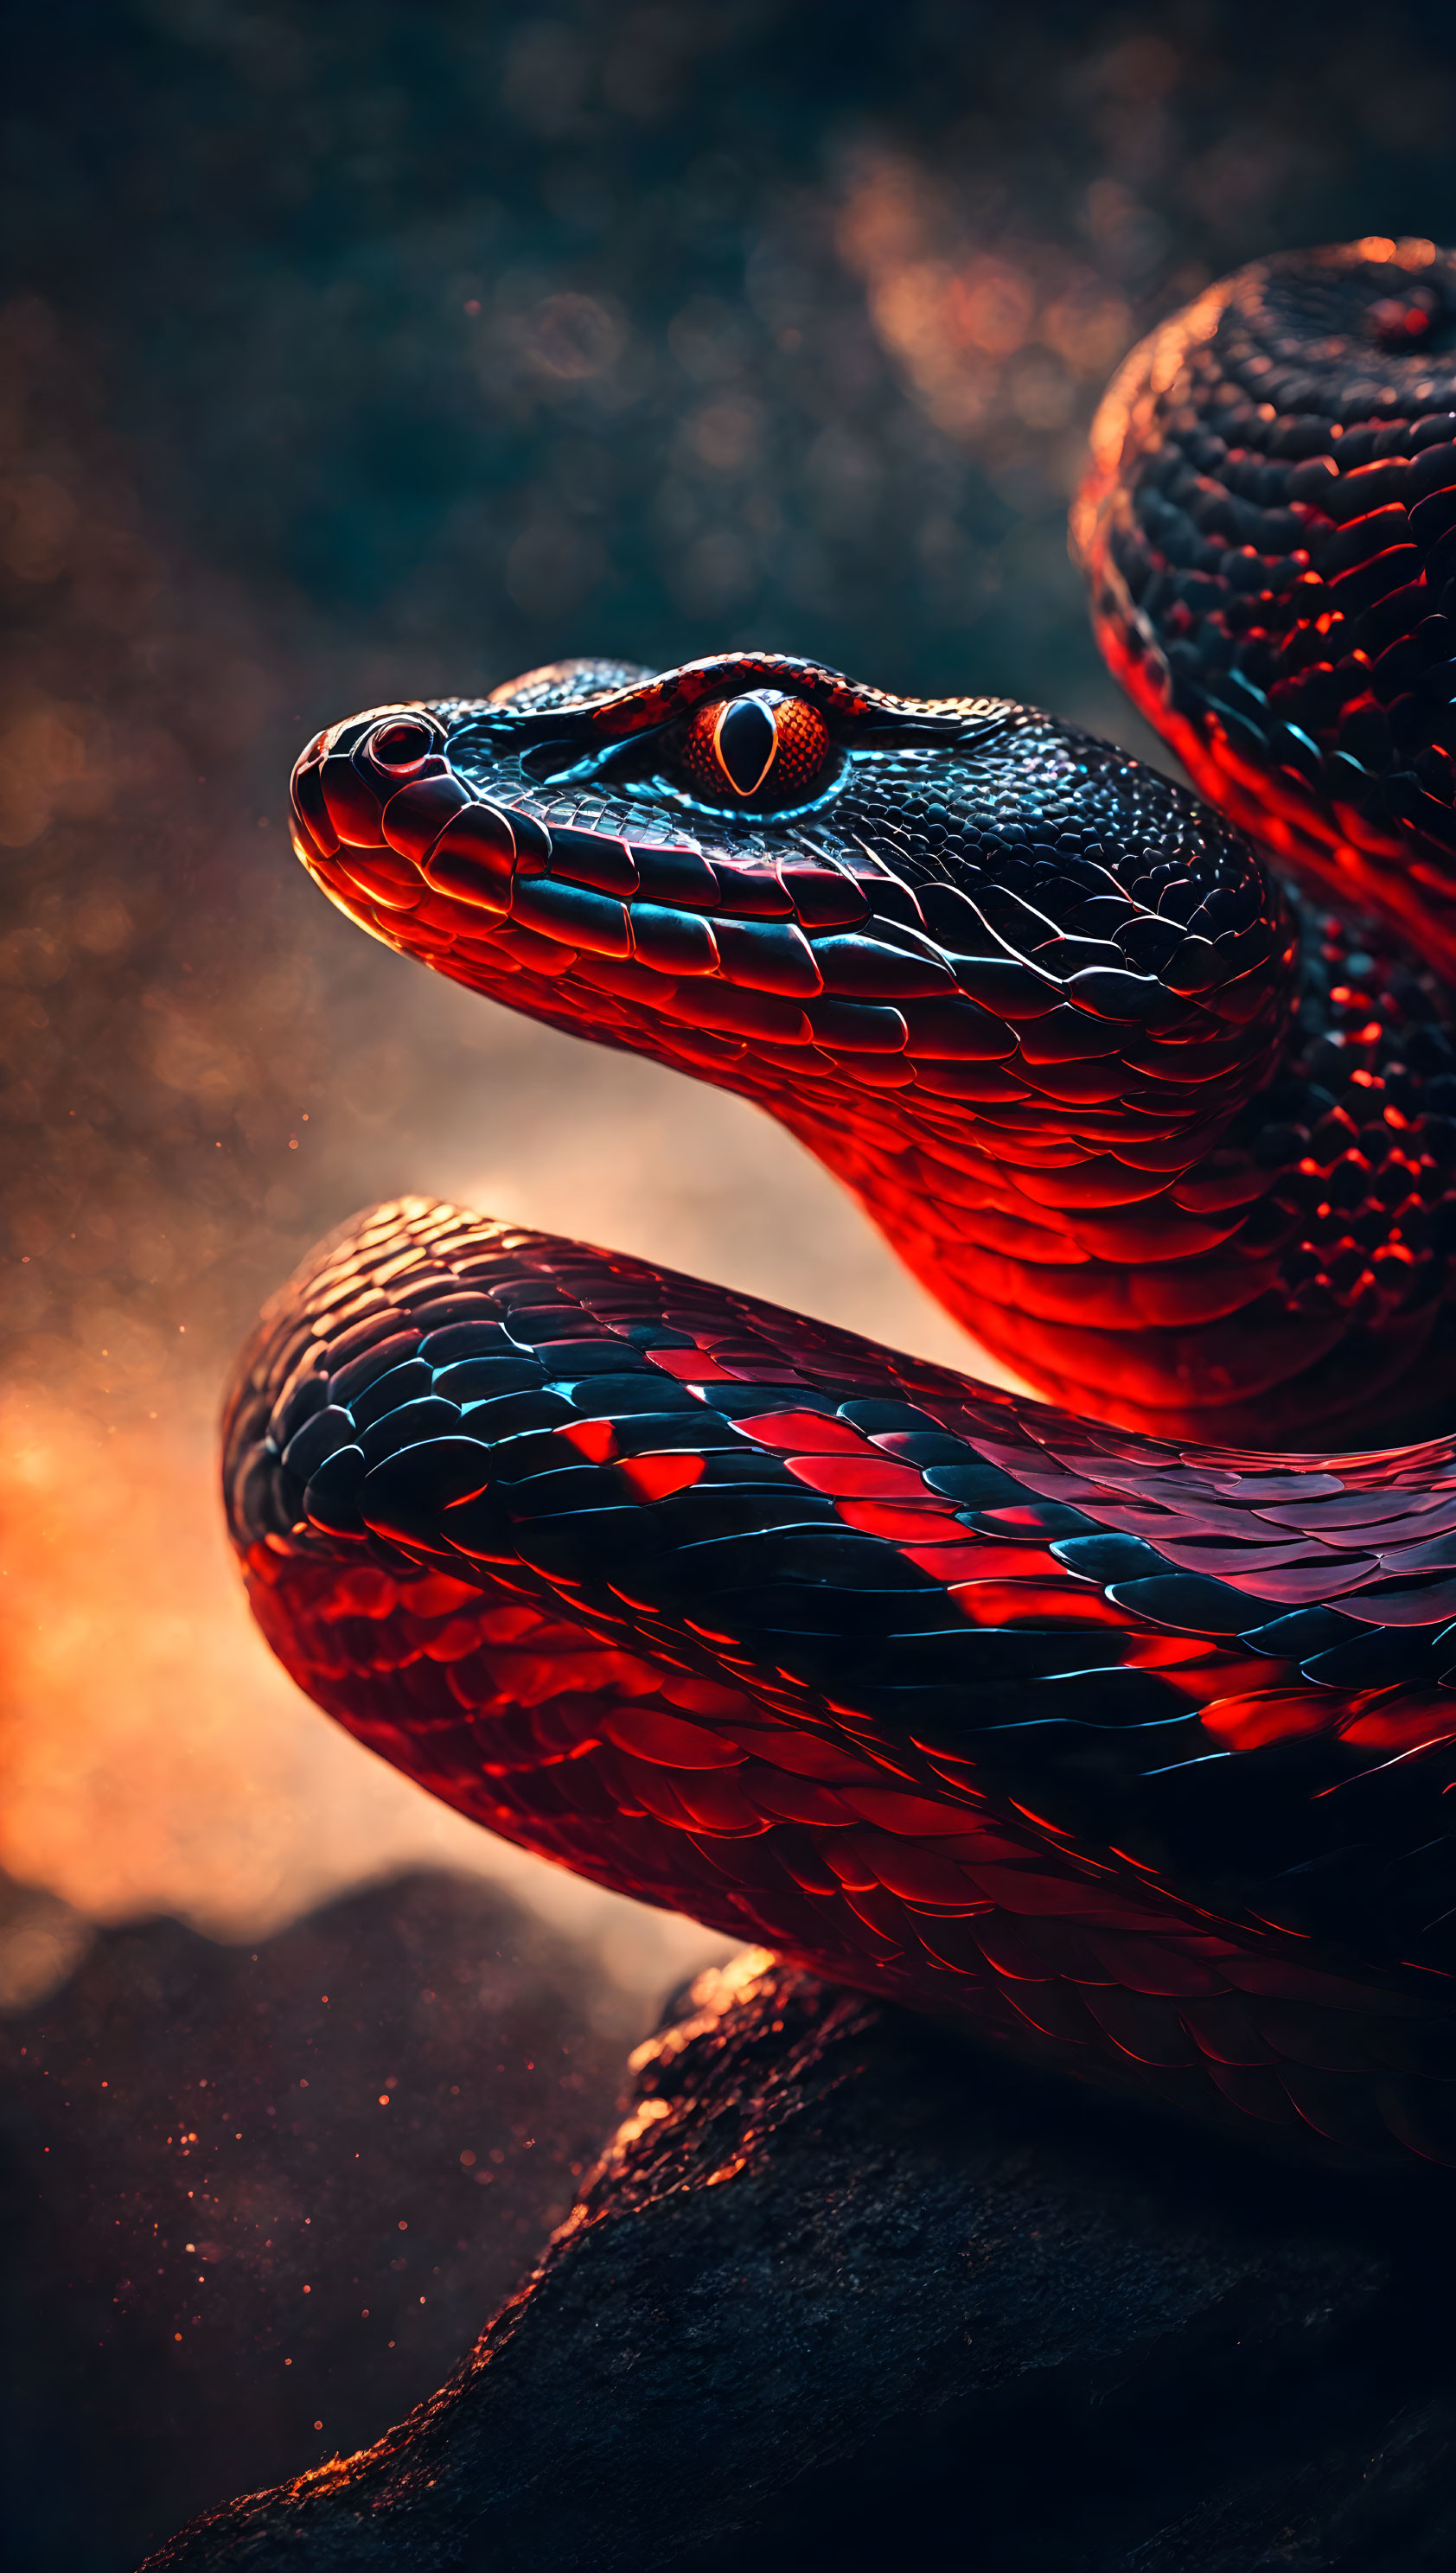 Sparkling black and red snake